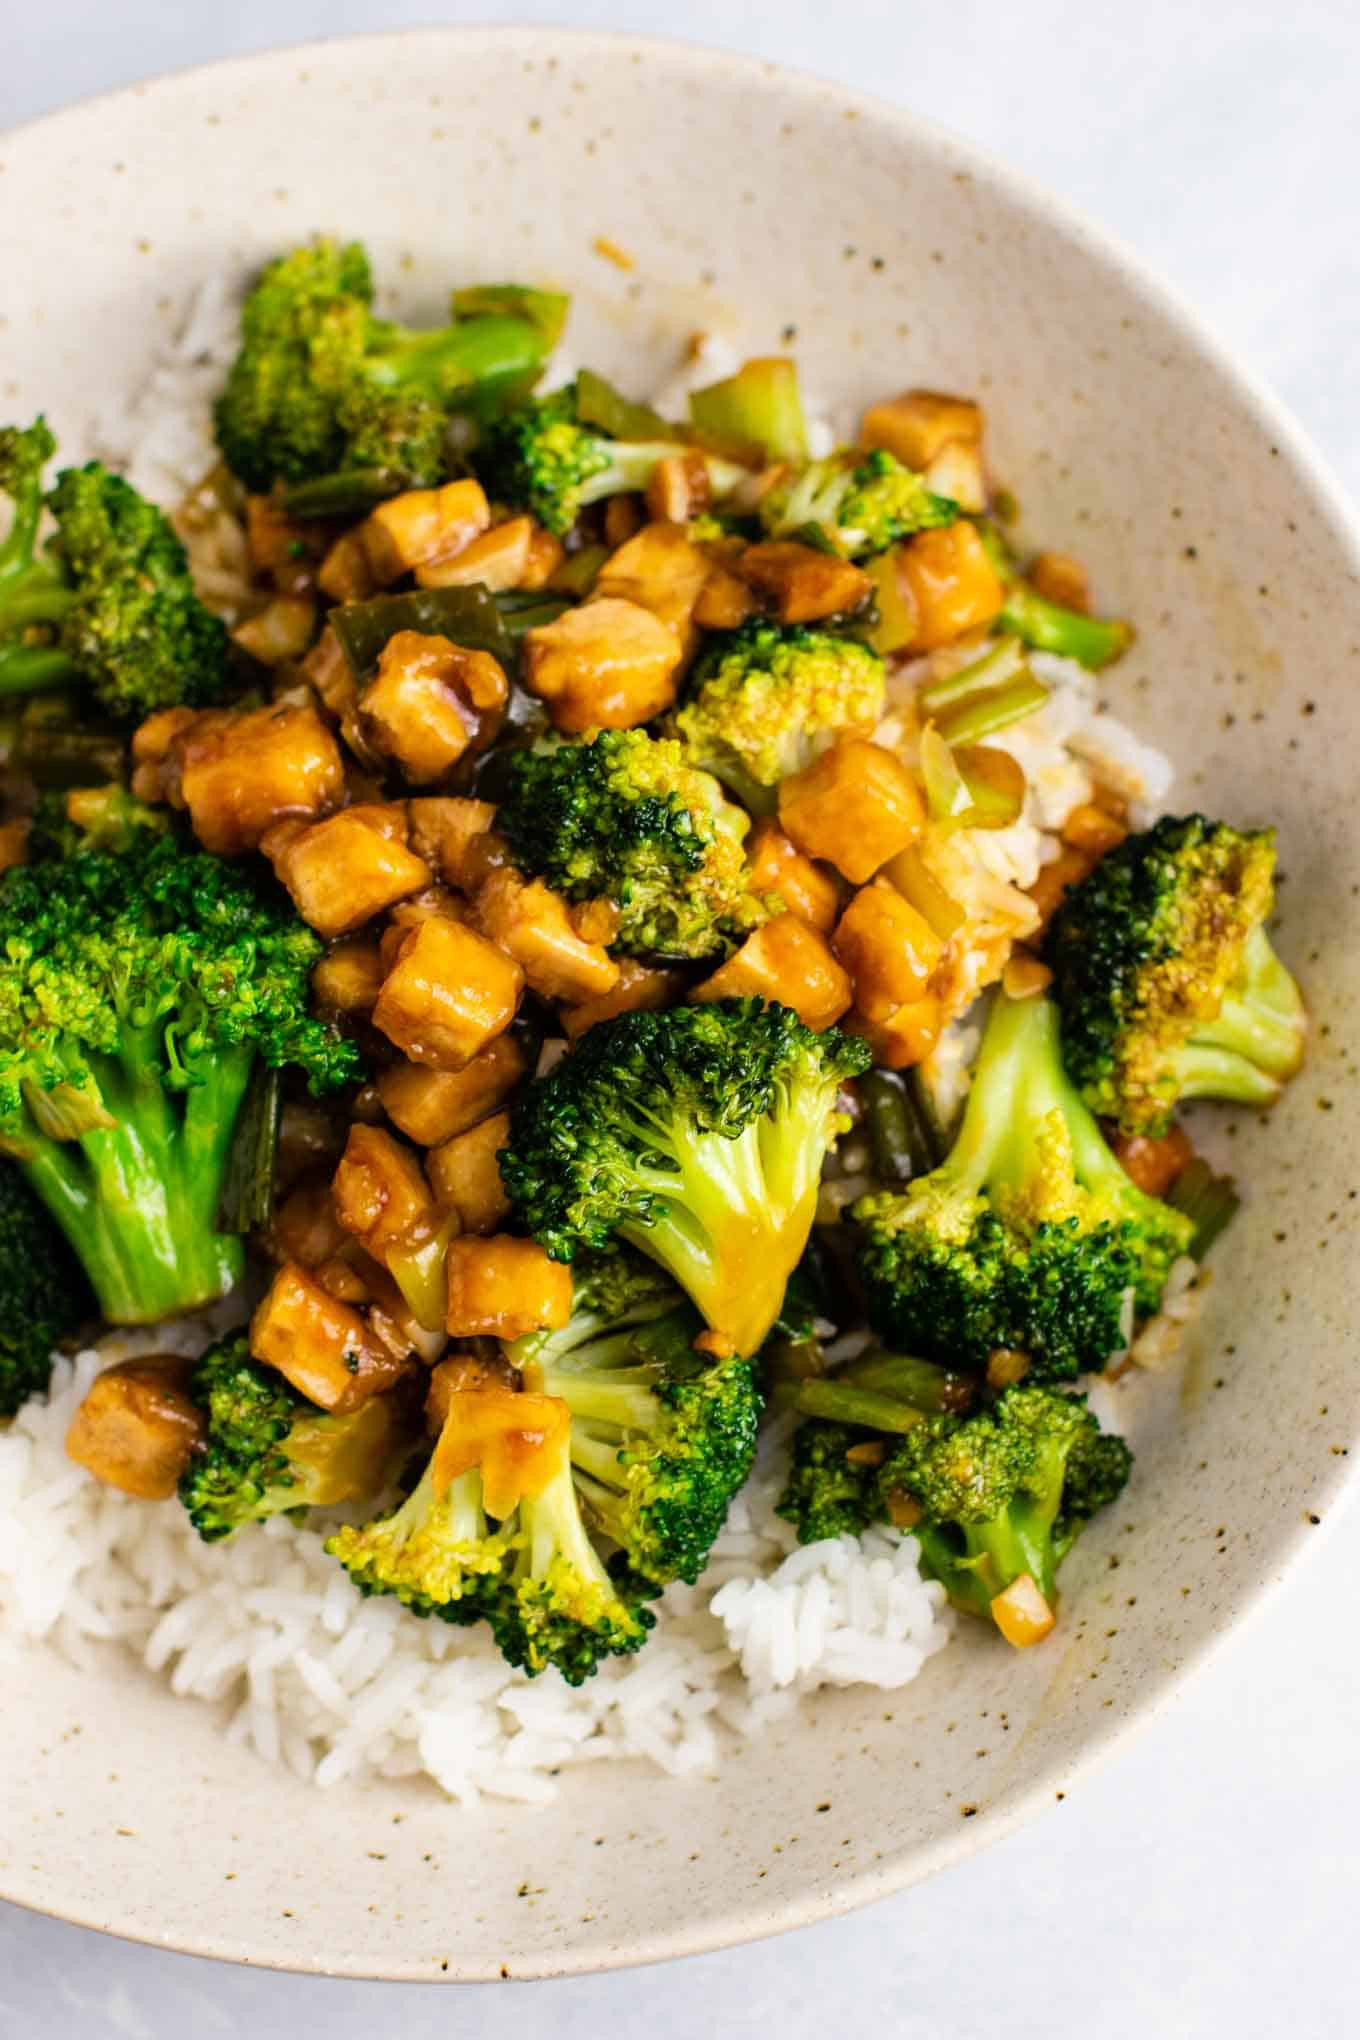 Vegan Tofu Recipes For Dinner
 The Best Broccoli Tofu Stir Fry Recipe Build Your Bite